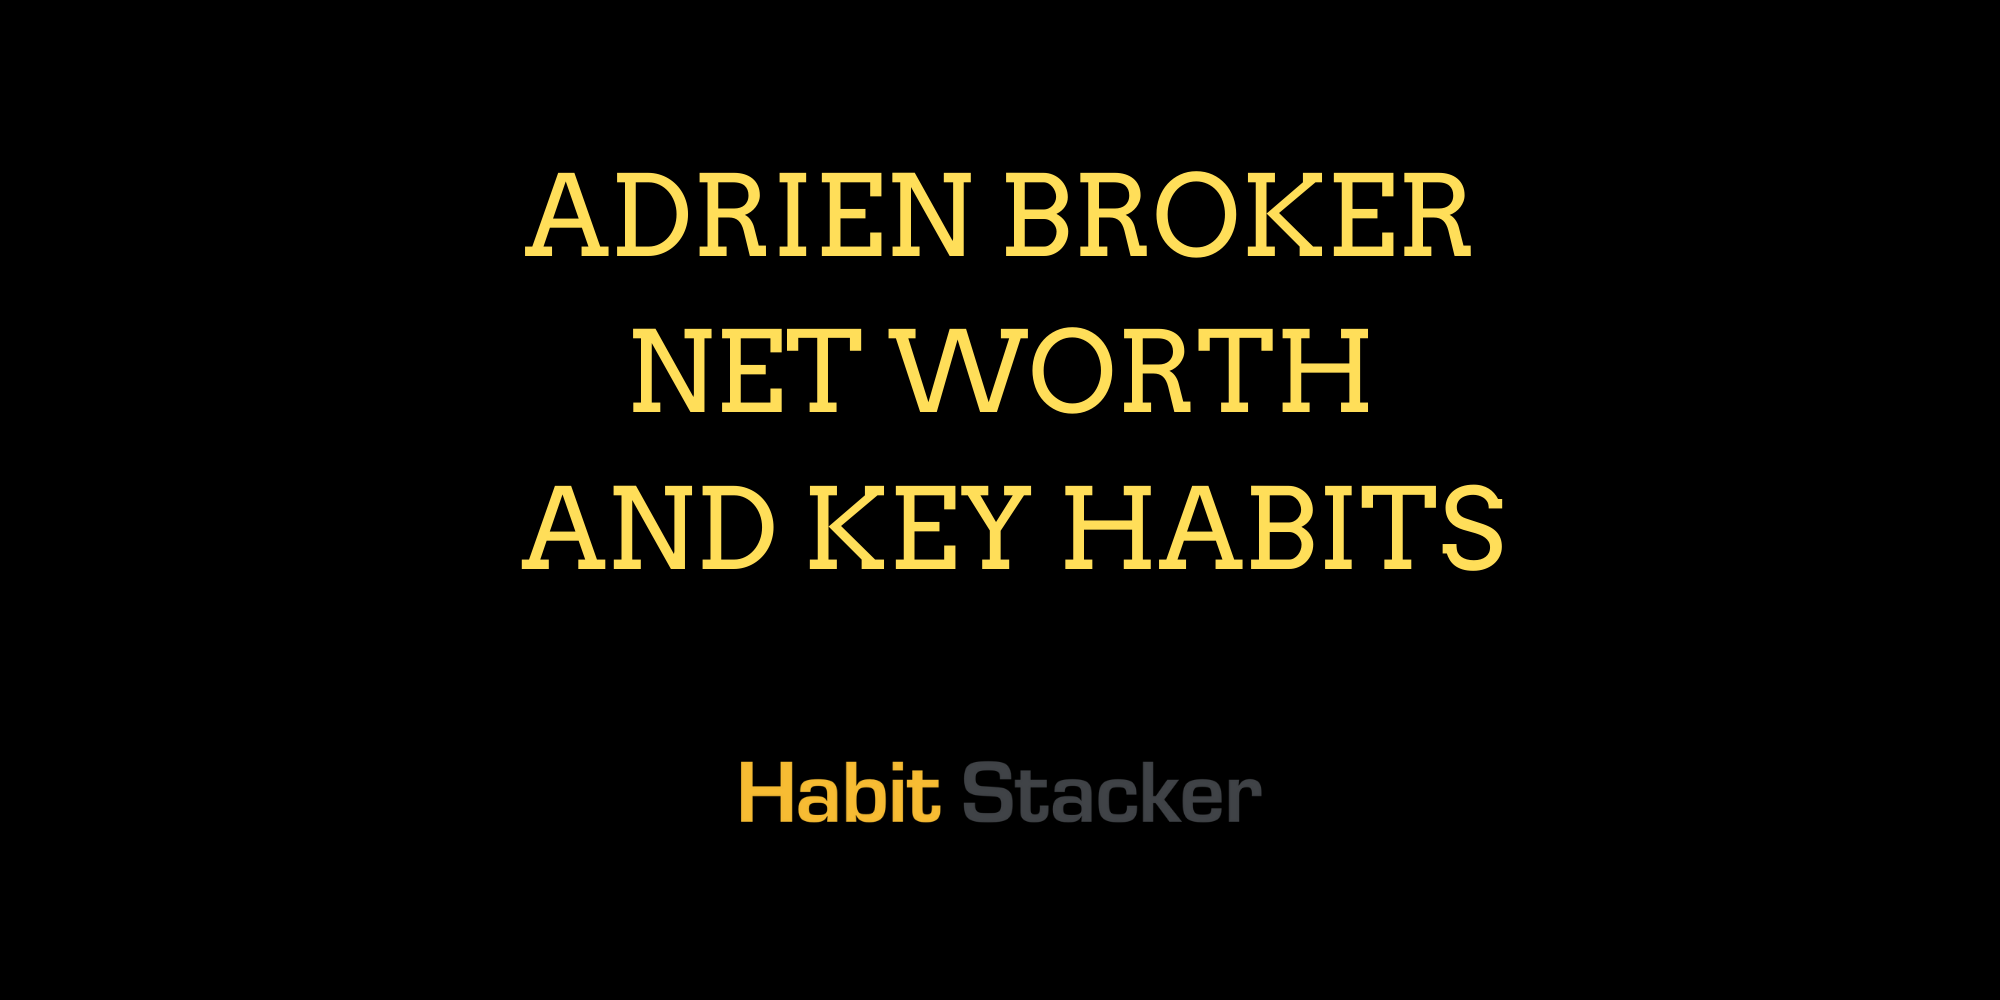 Adrien Broker Net Worth and Key Habits